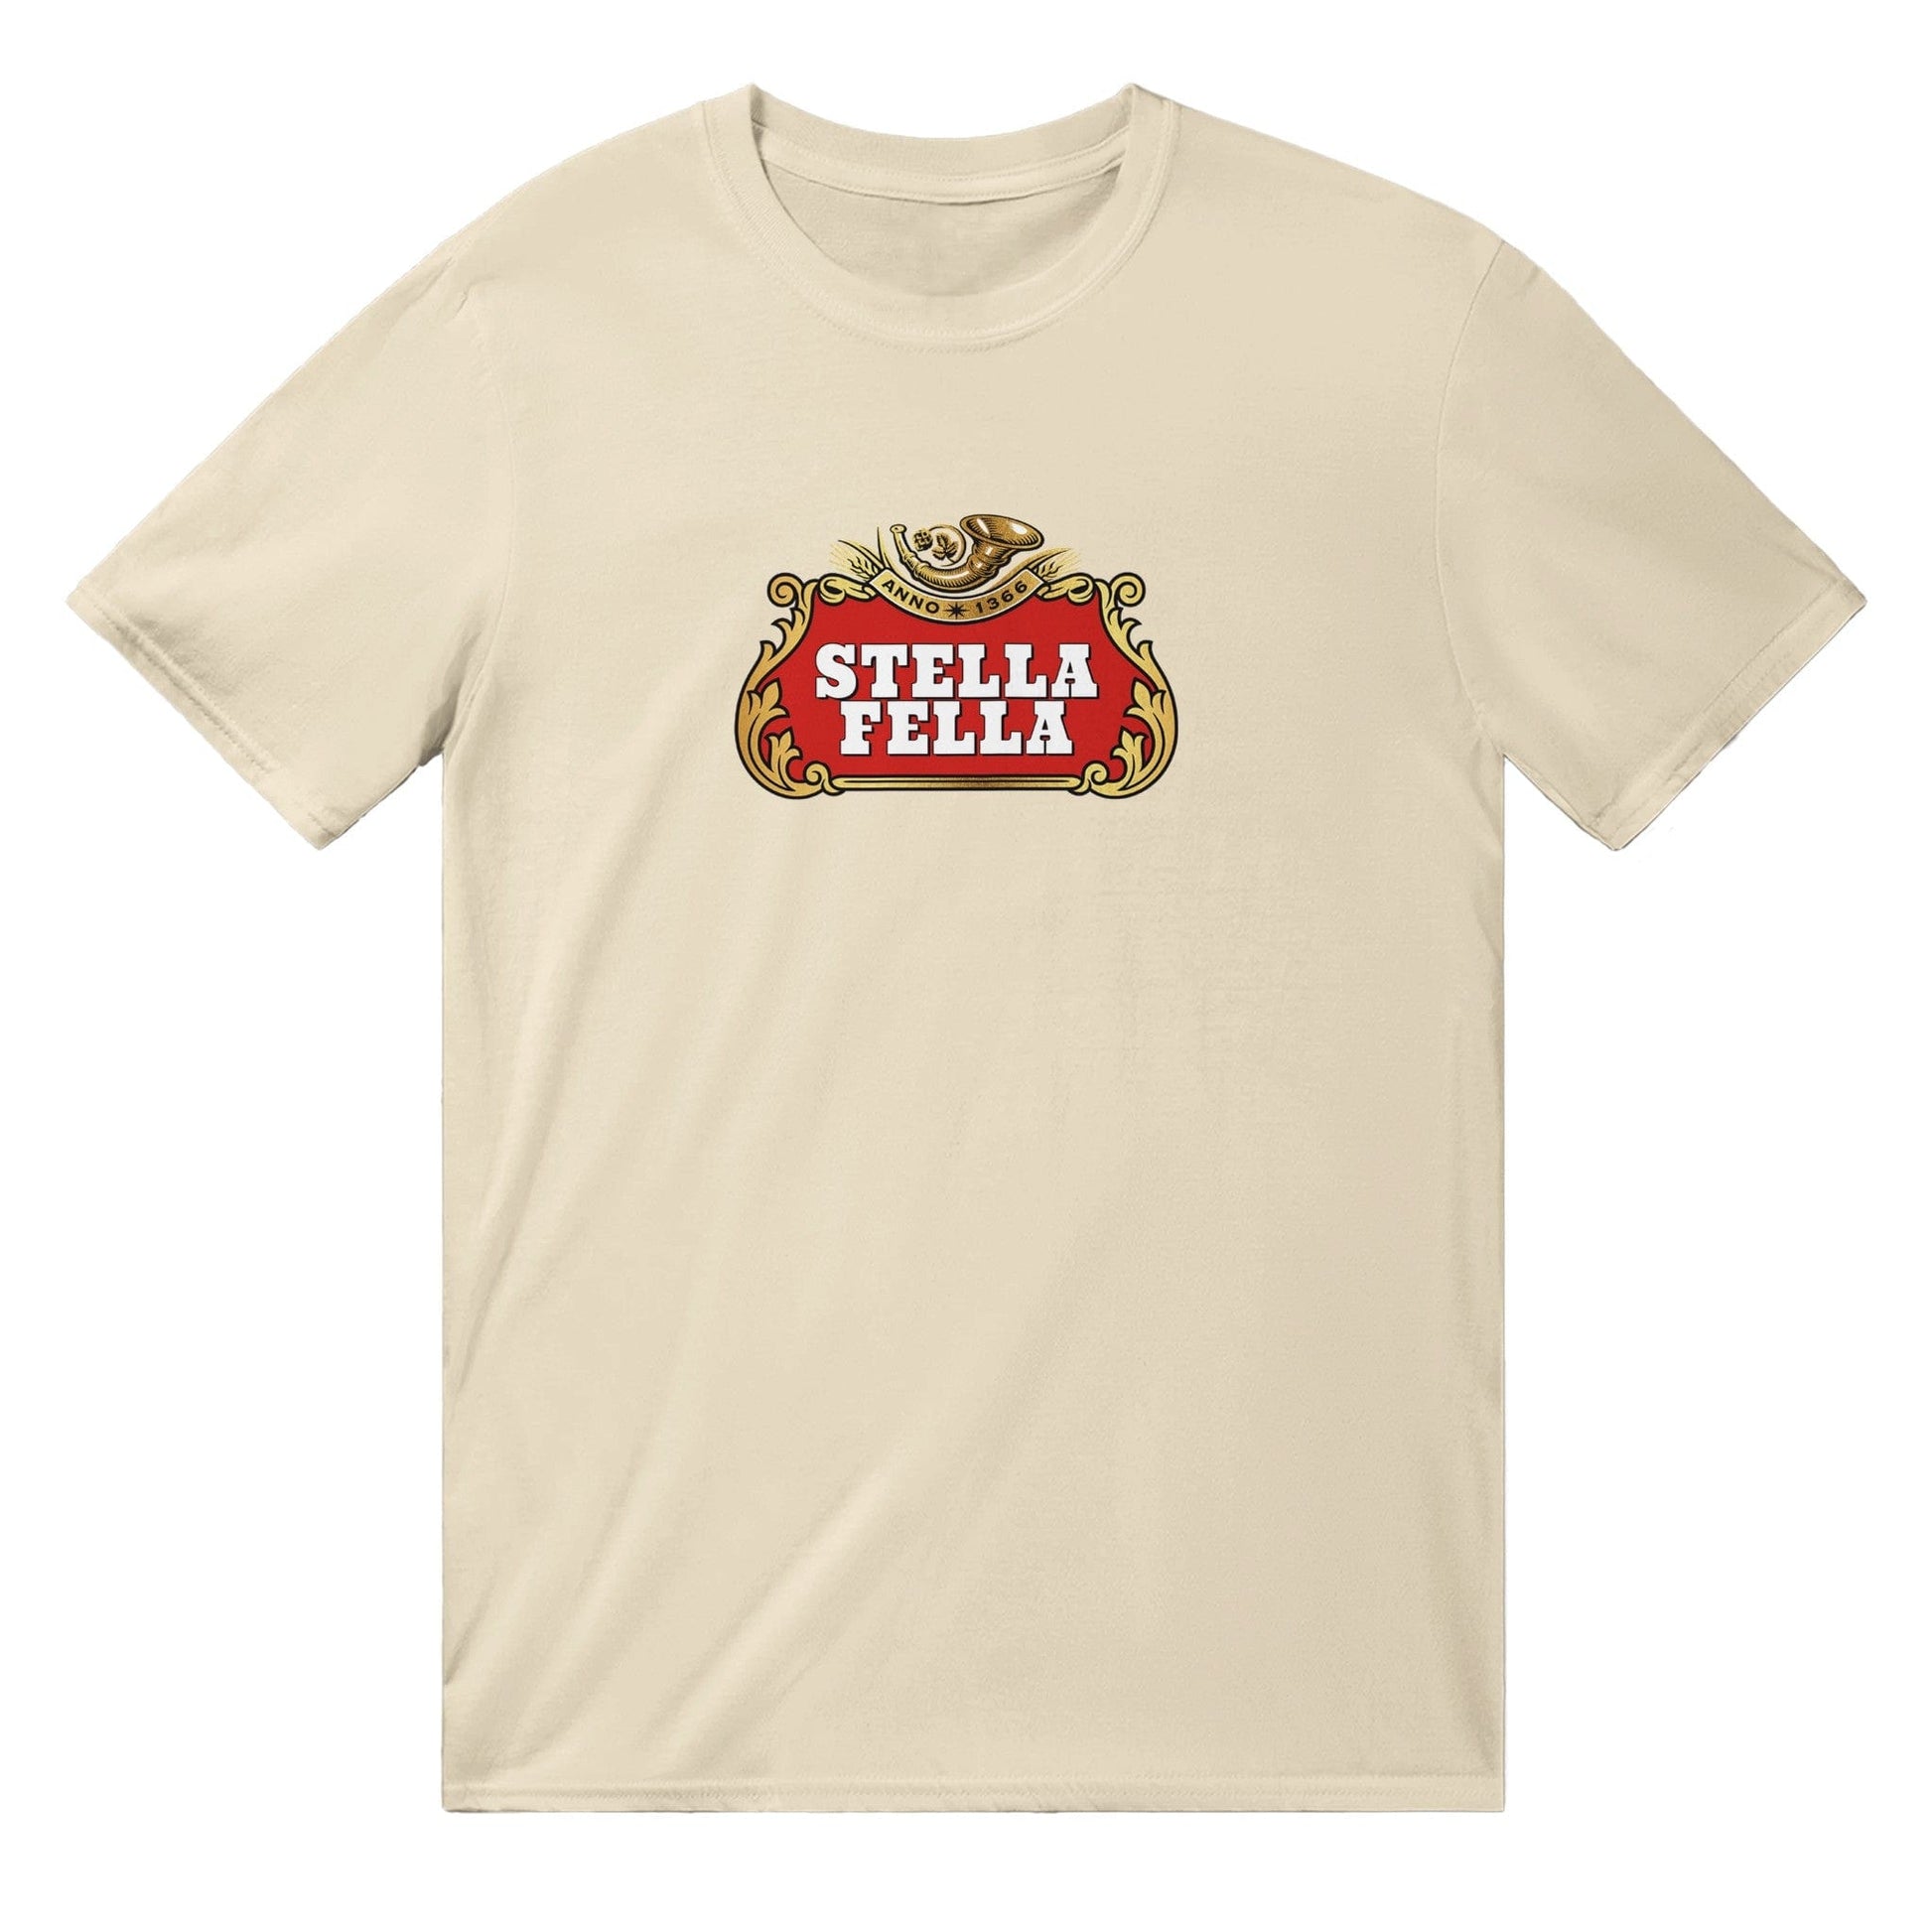 Stella Fella T-Shirt Graphic Tee Natural / S BC Australia